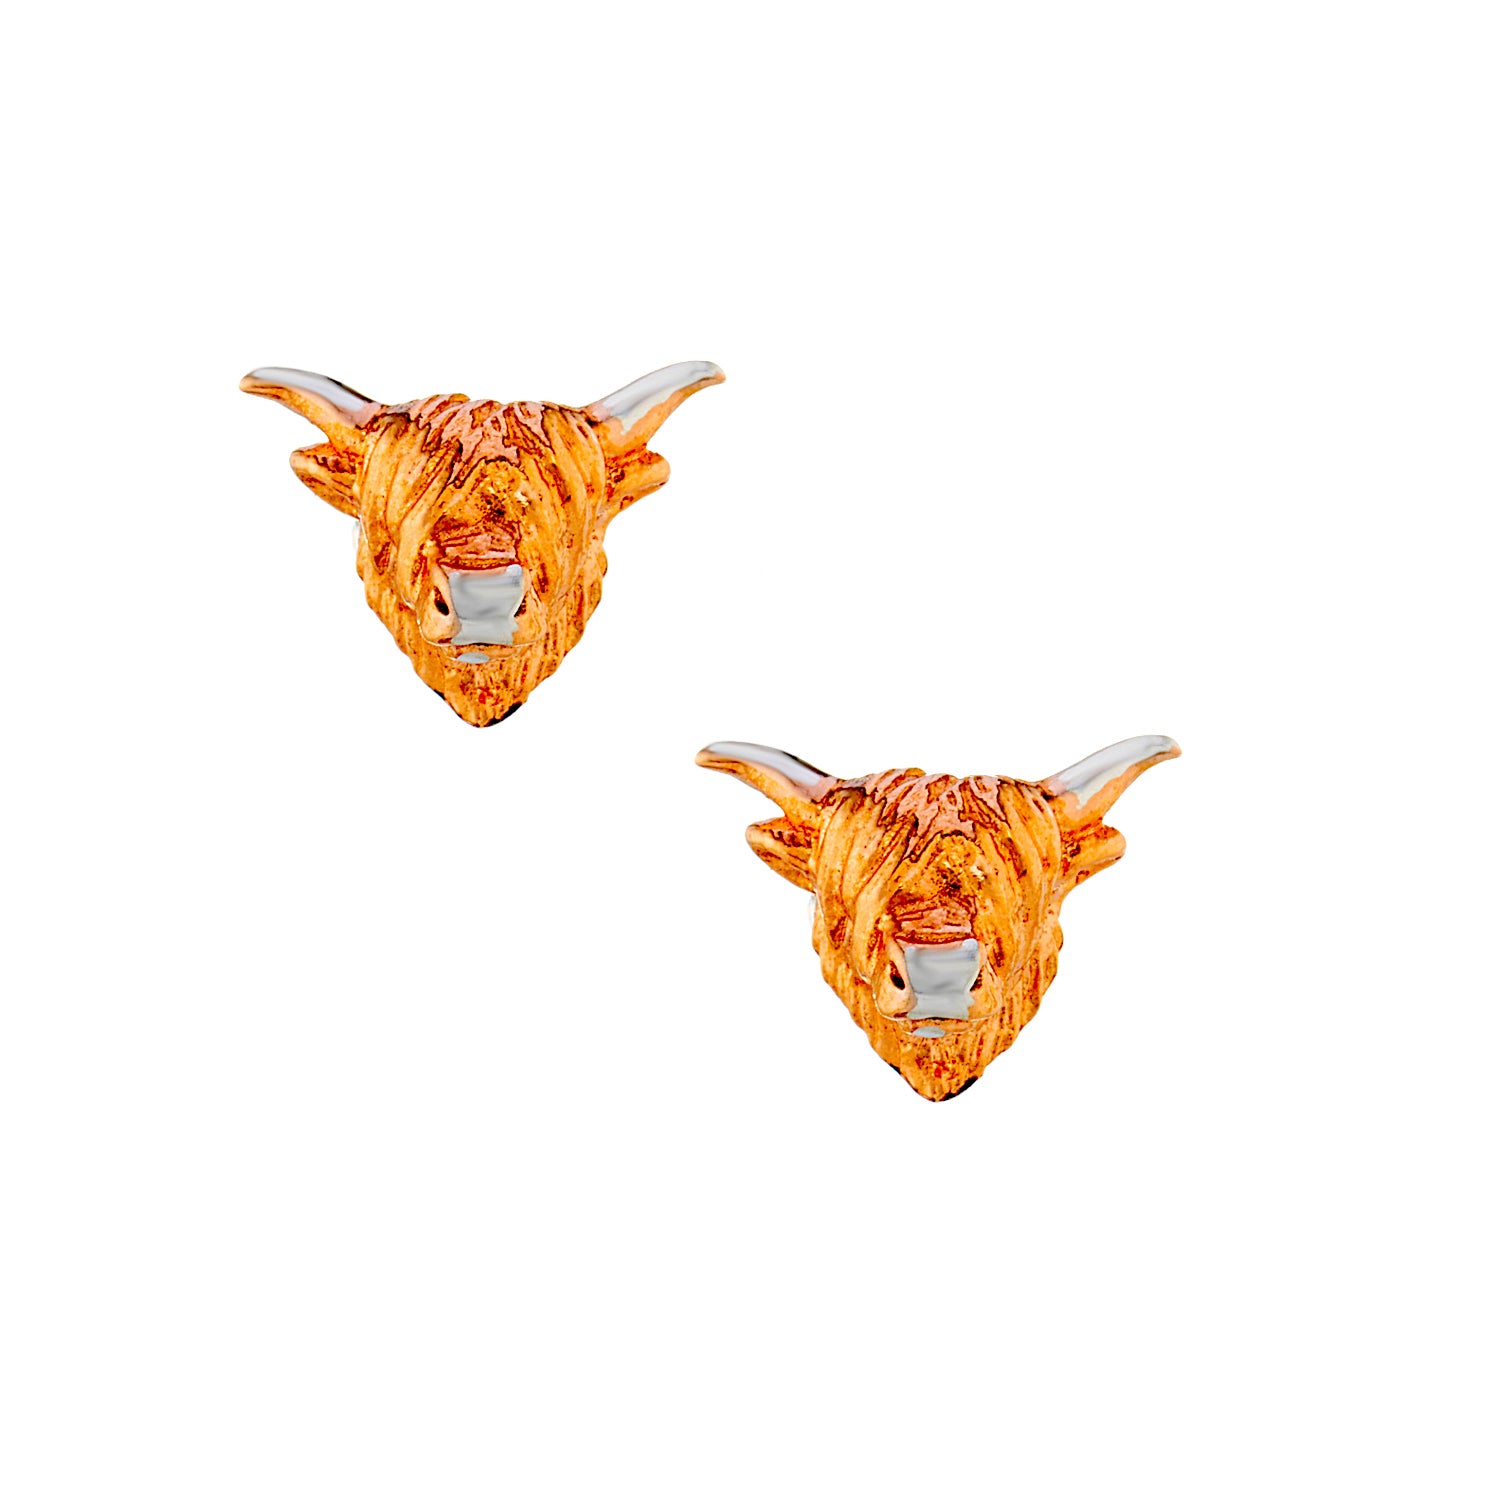 Highland cow stud earrings